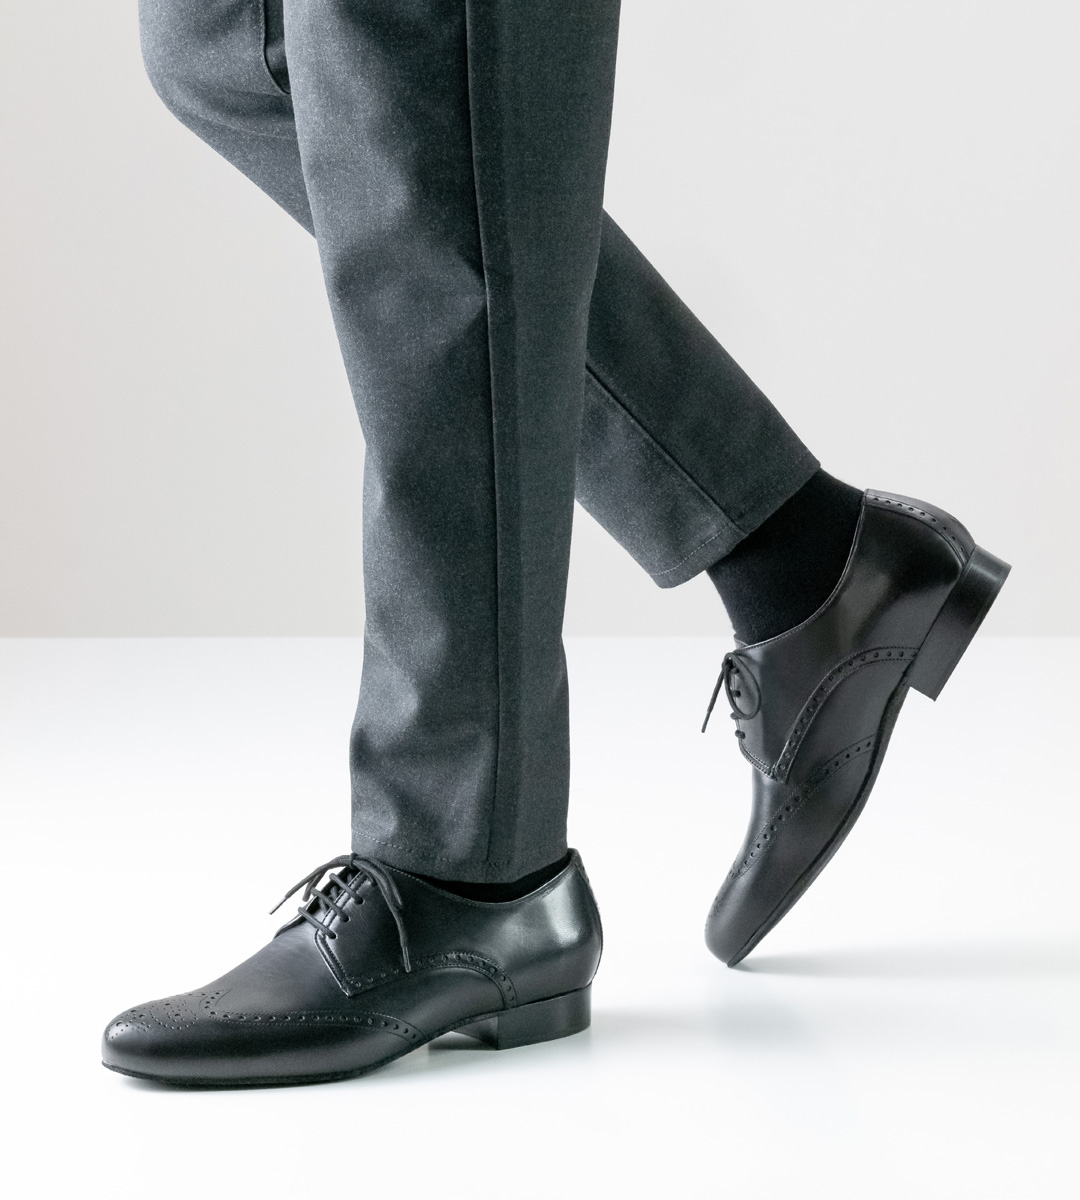 black men's dance shoe by Anna Kern in black leather